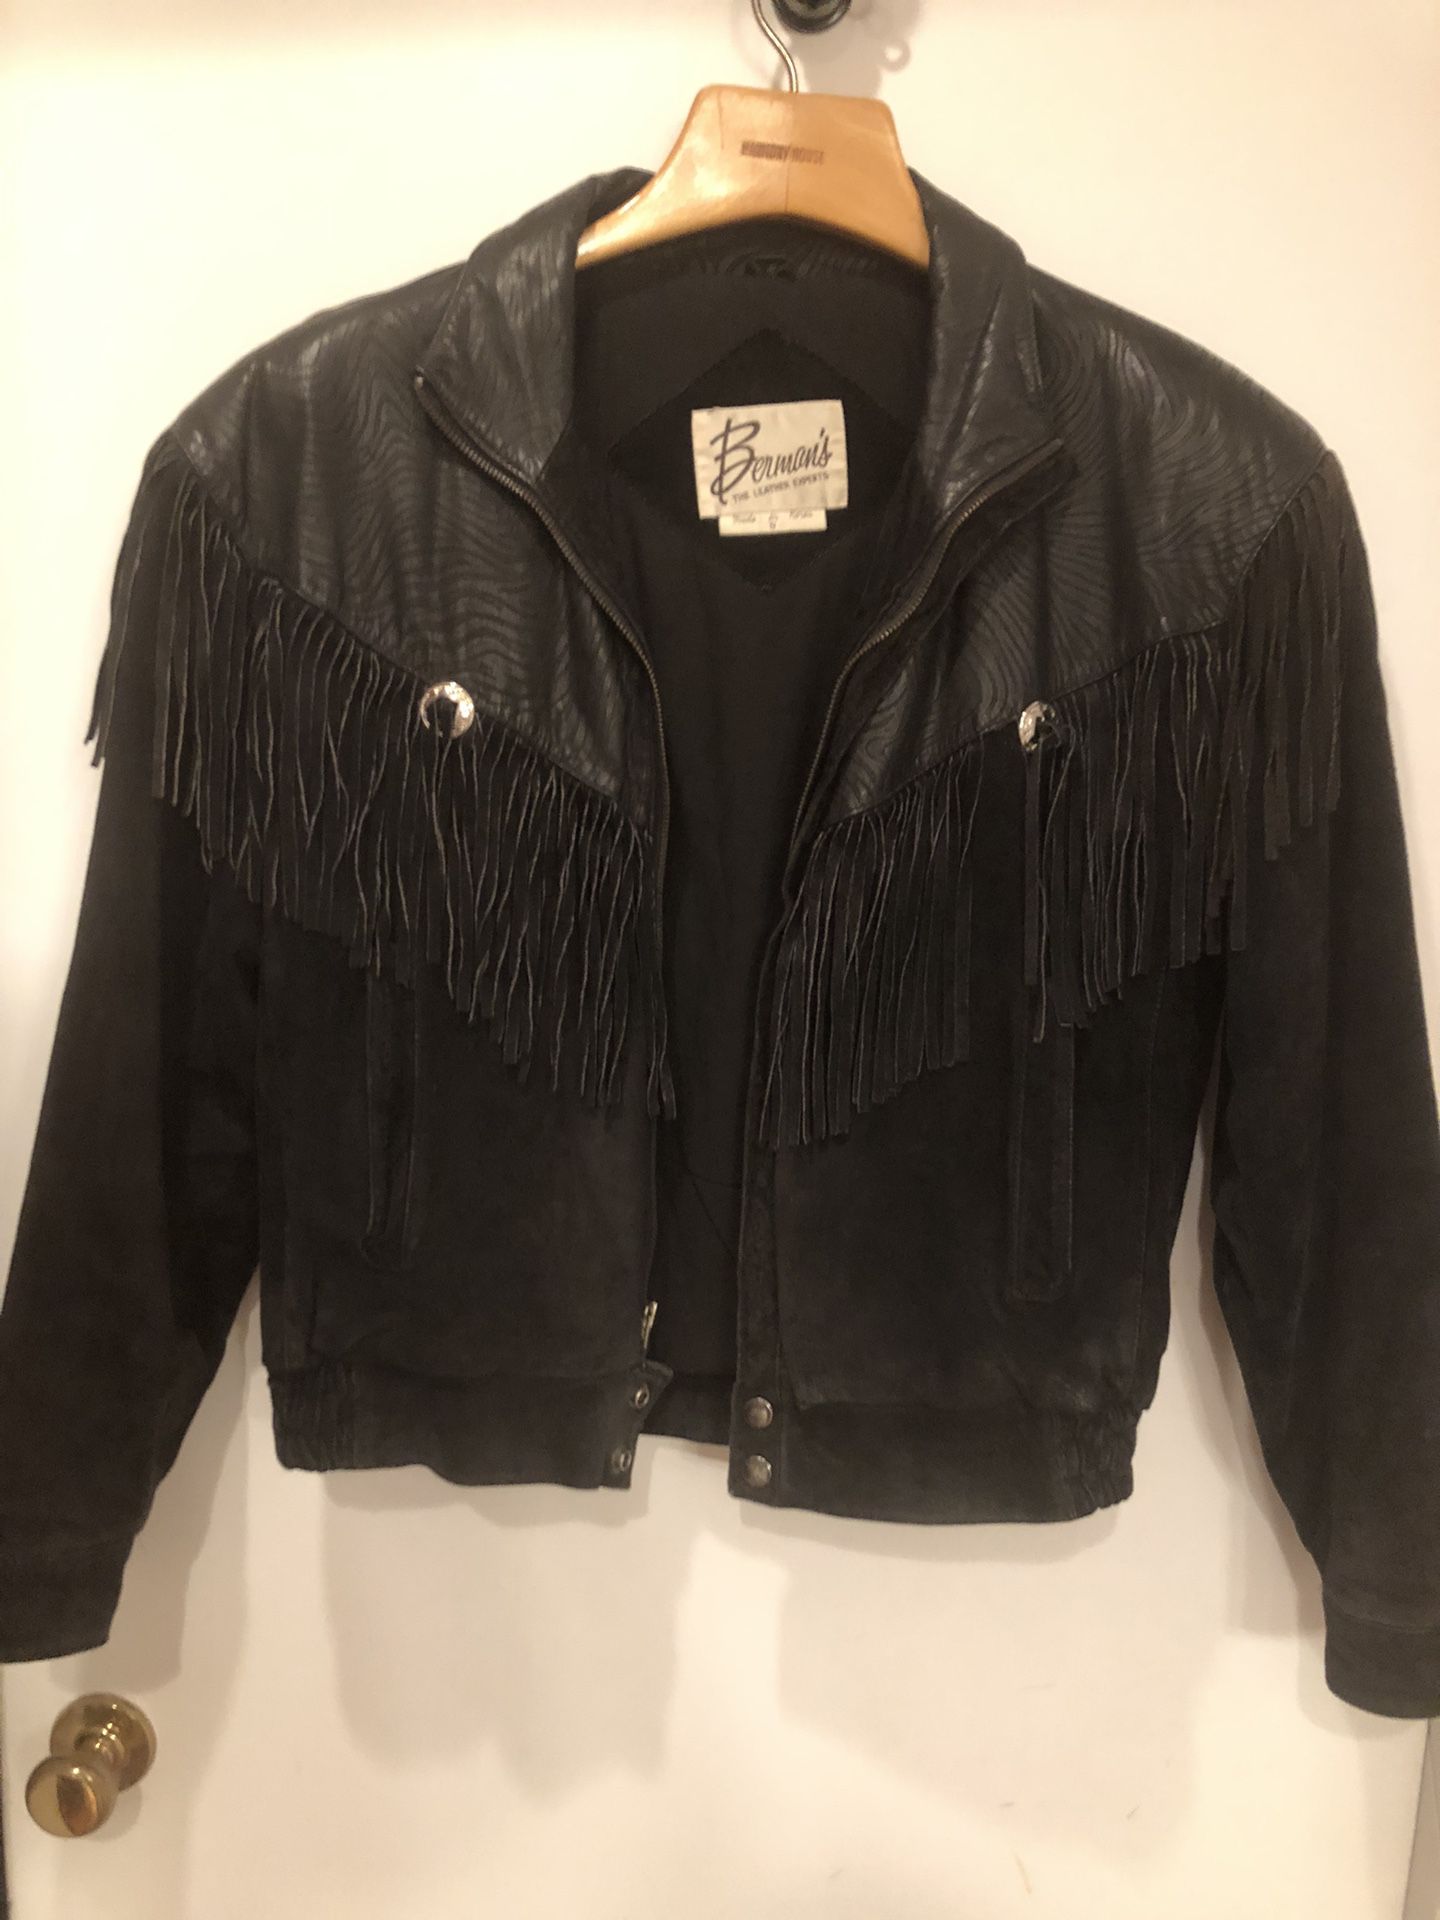 Vintage 1970s/1980s Leather/Suede Fringe Jacket Black Size Small